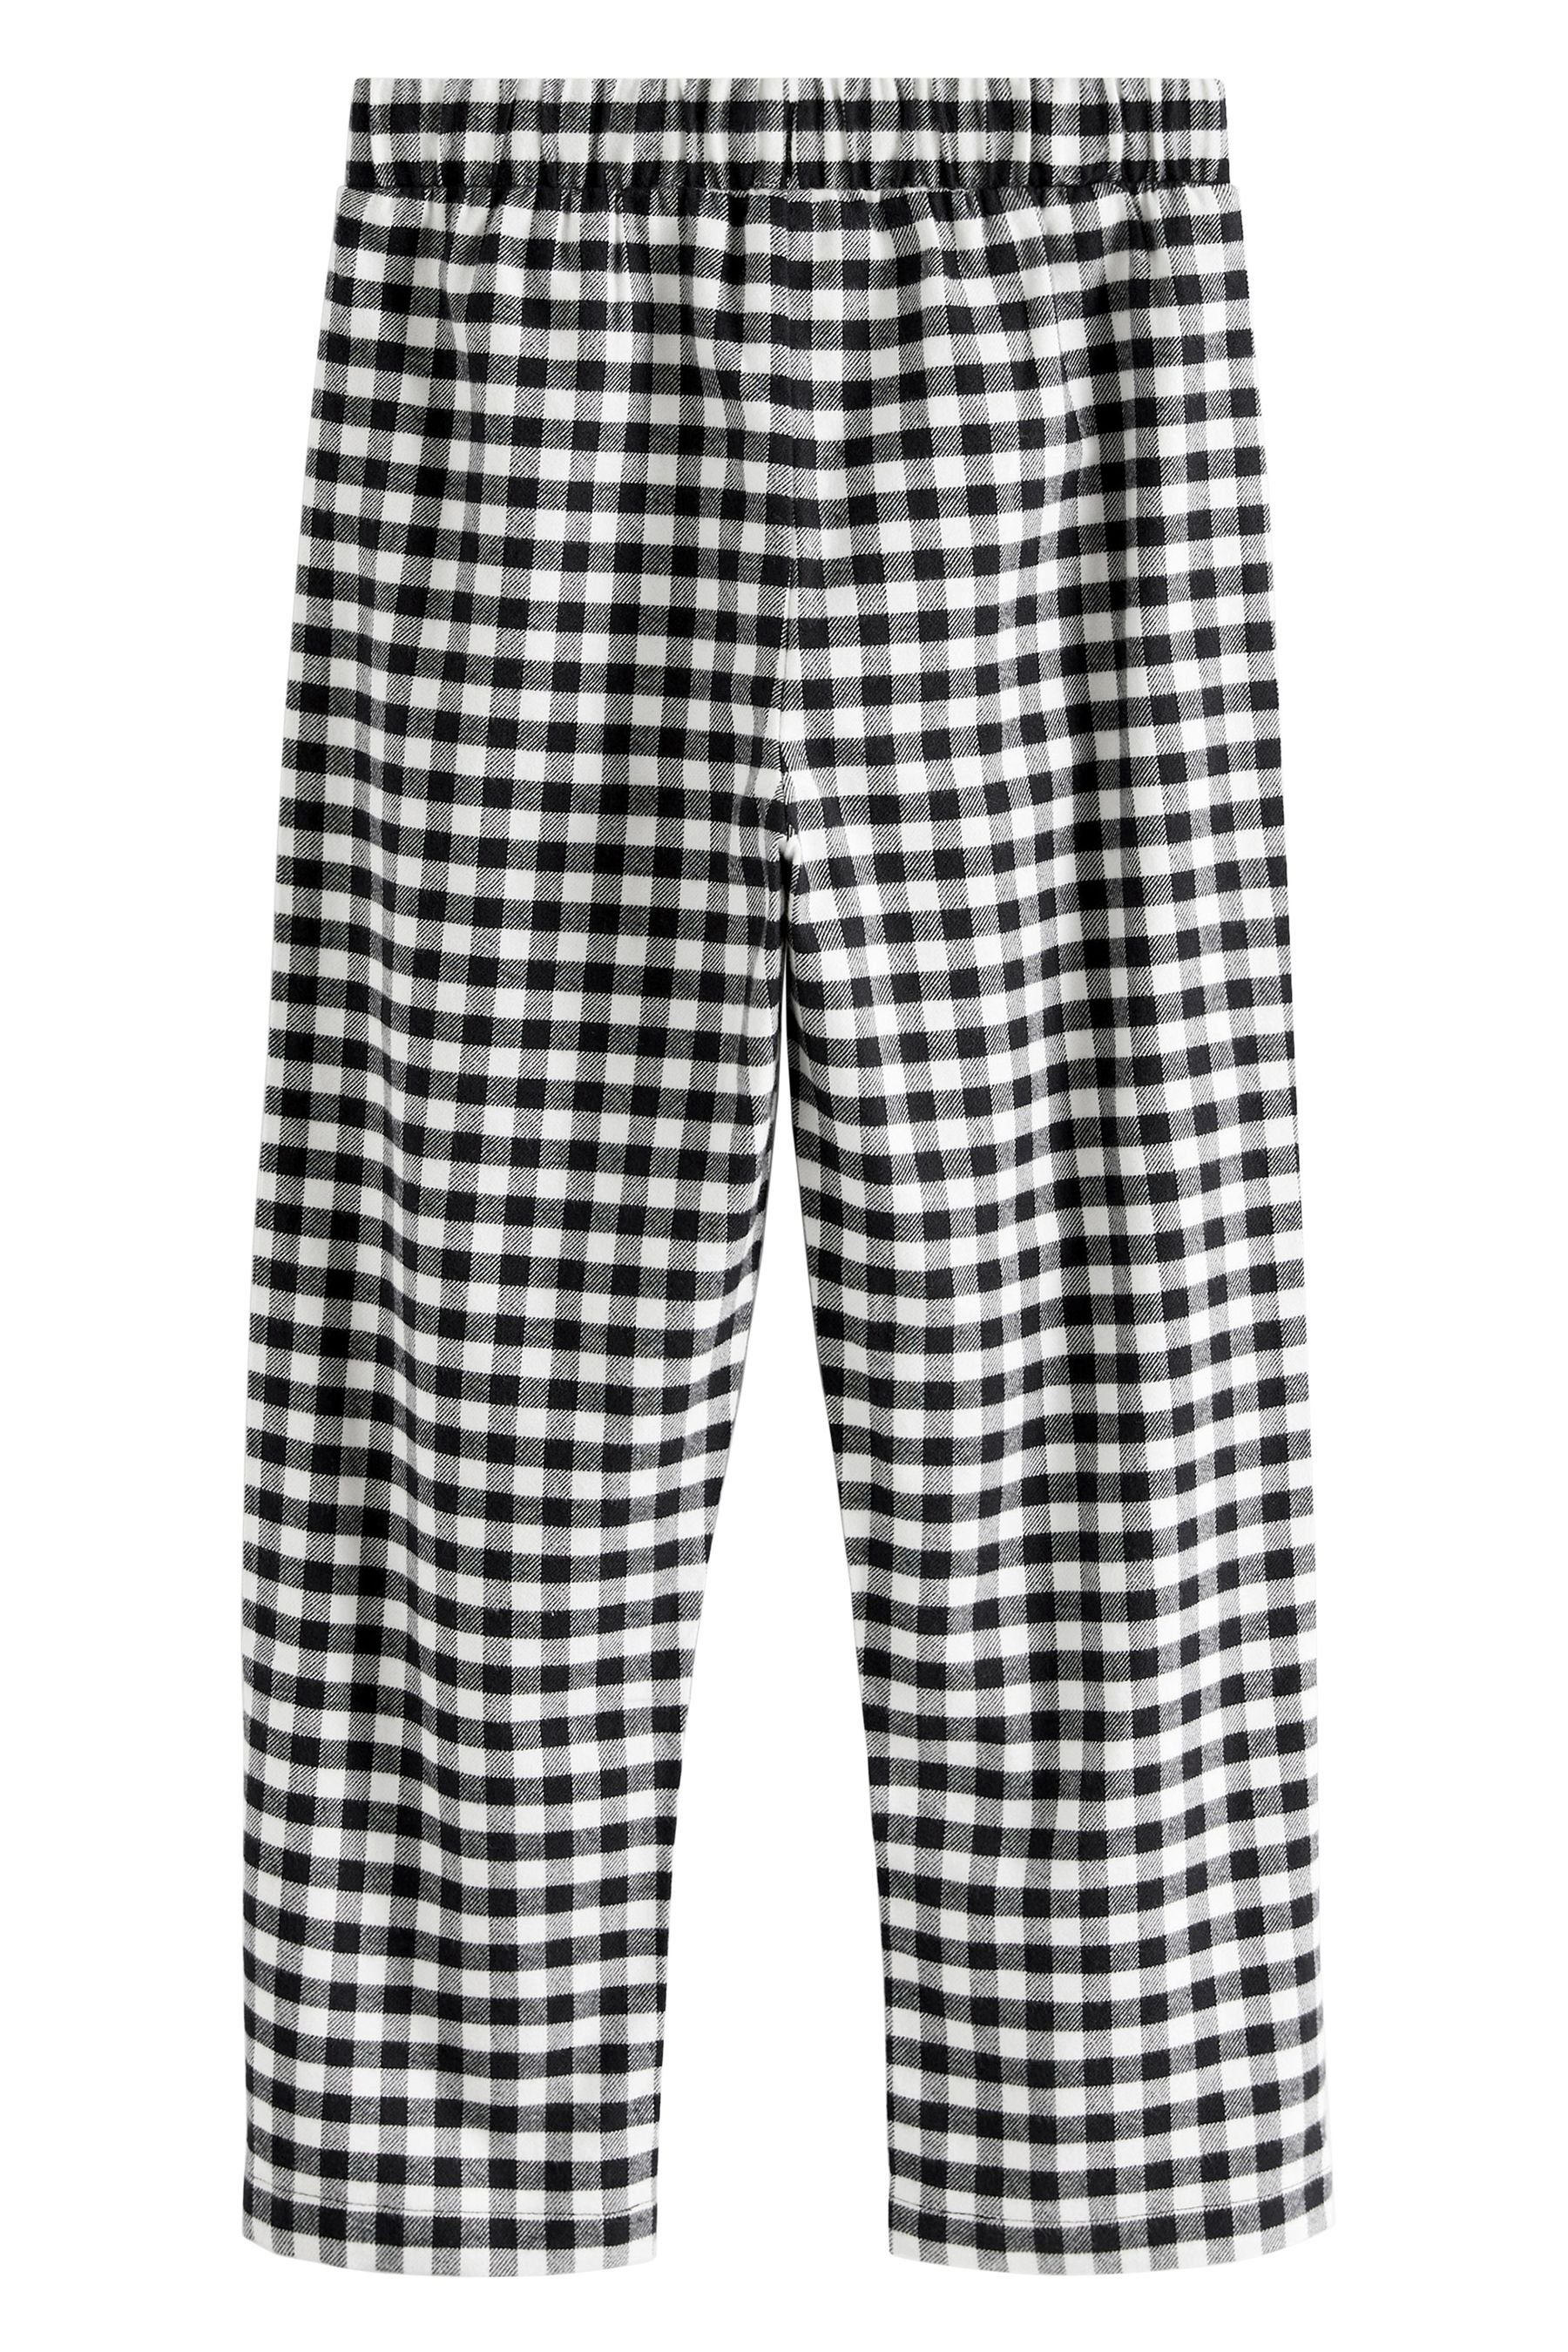 Next Schlafanzüge (4 Pyjama tlg) Jogginghose gewebter Black/White 2 Check mit